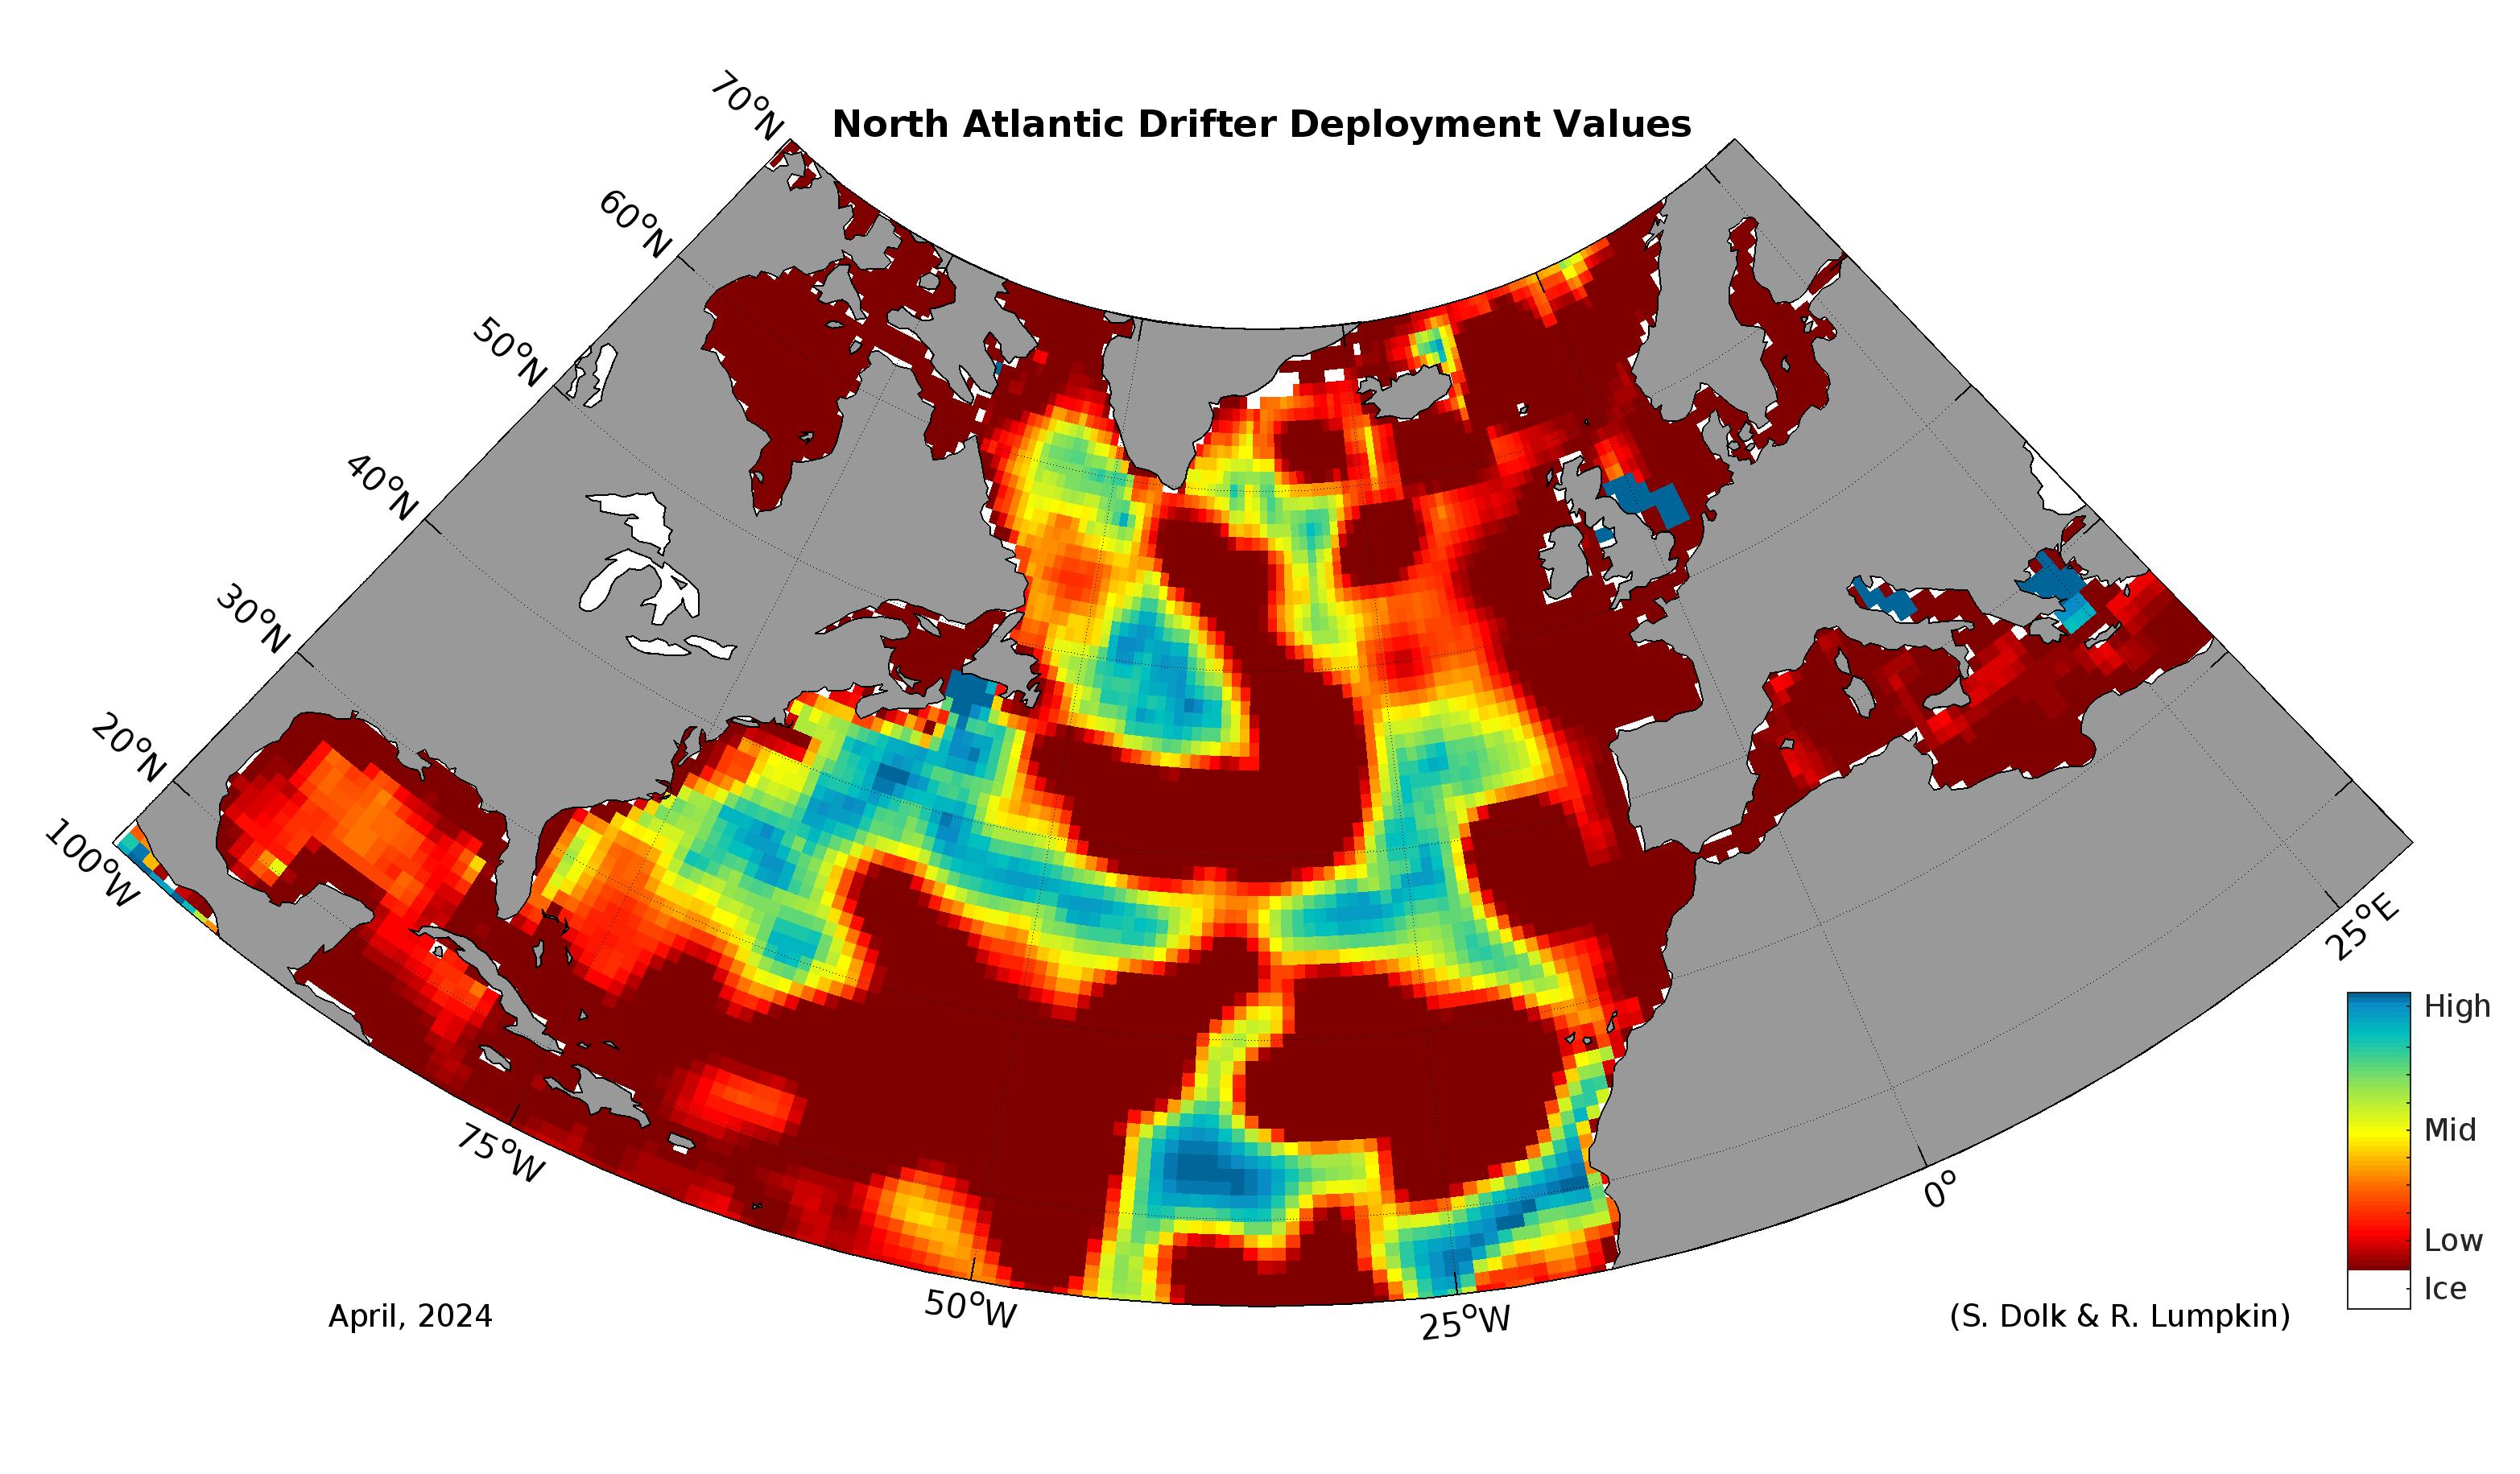 Global Drifter Program North Atlantic Deployment Value Map. Image Credit, NOAA. 